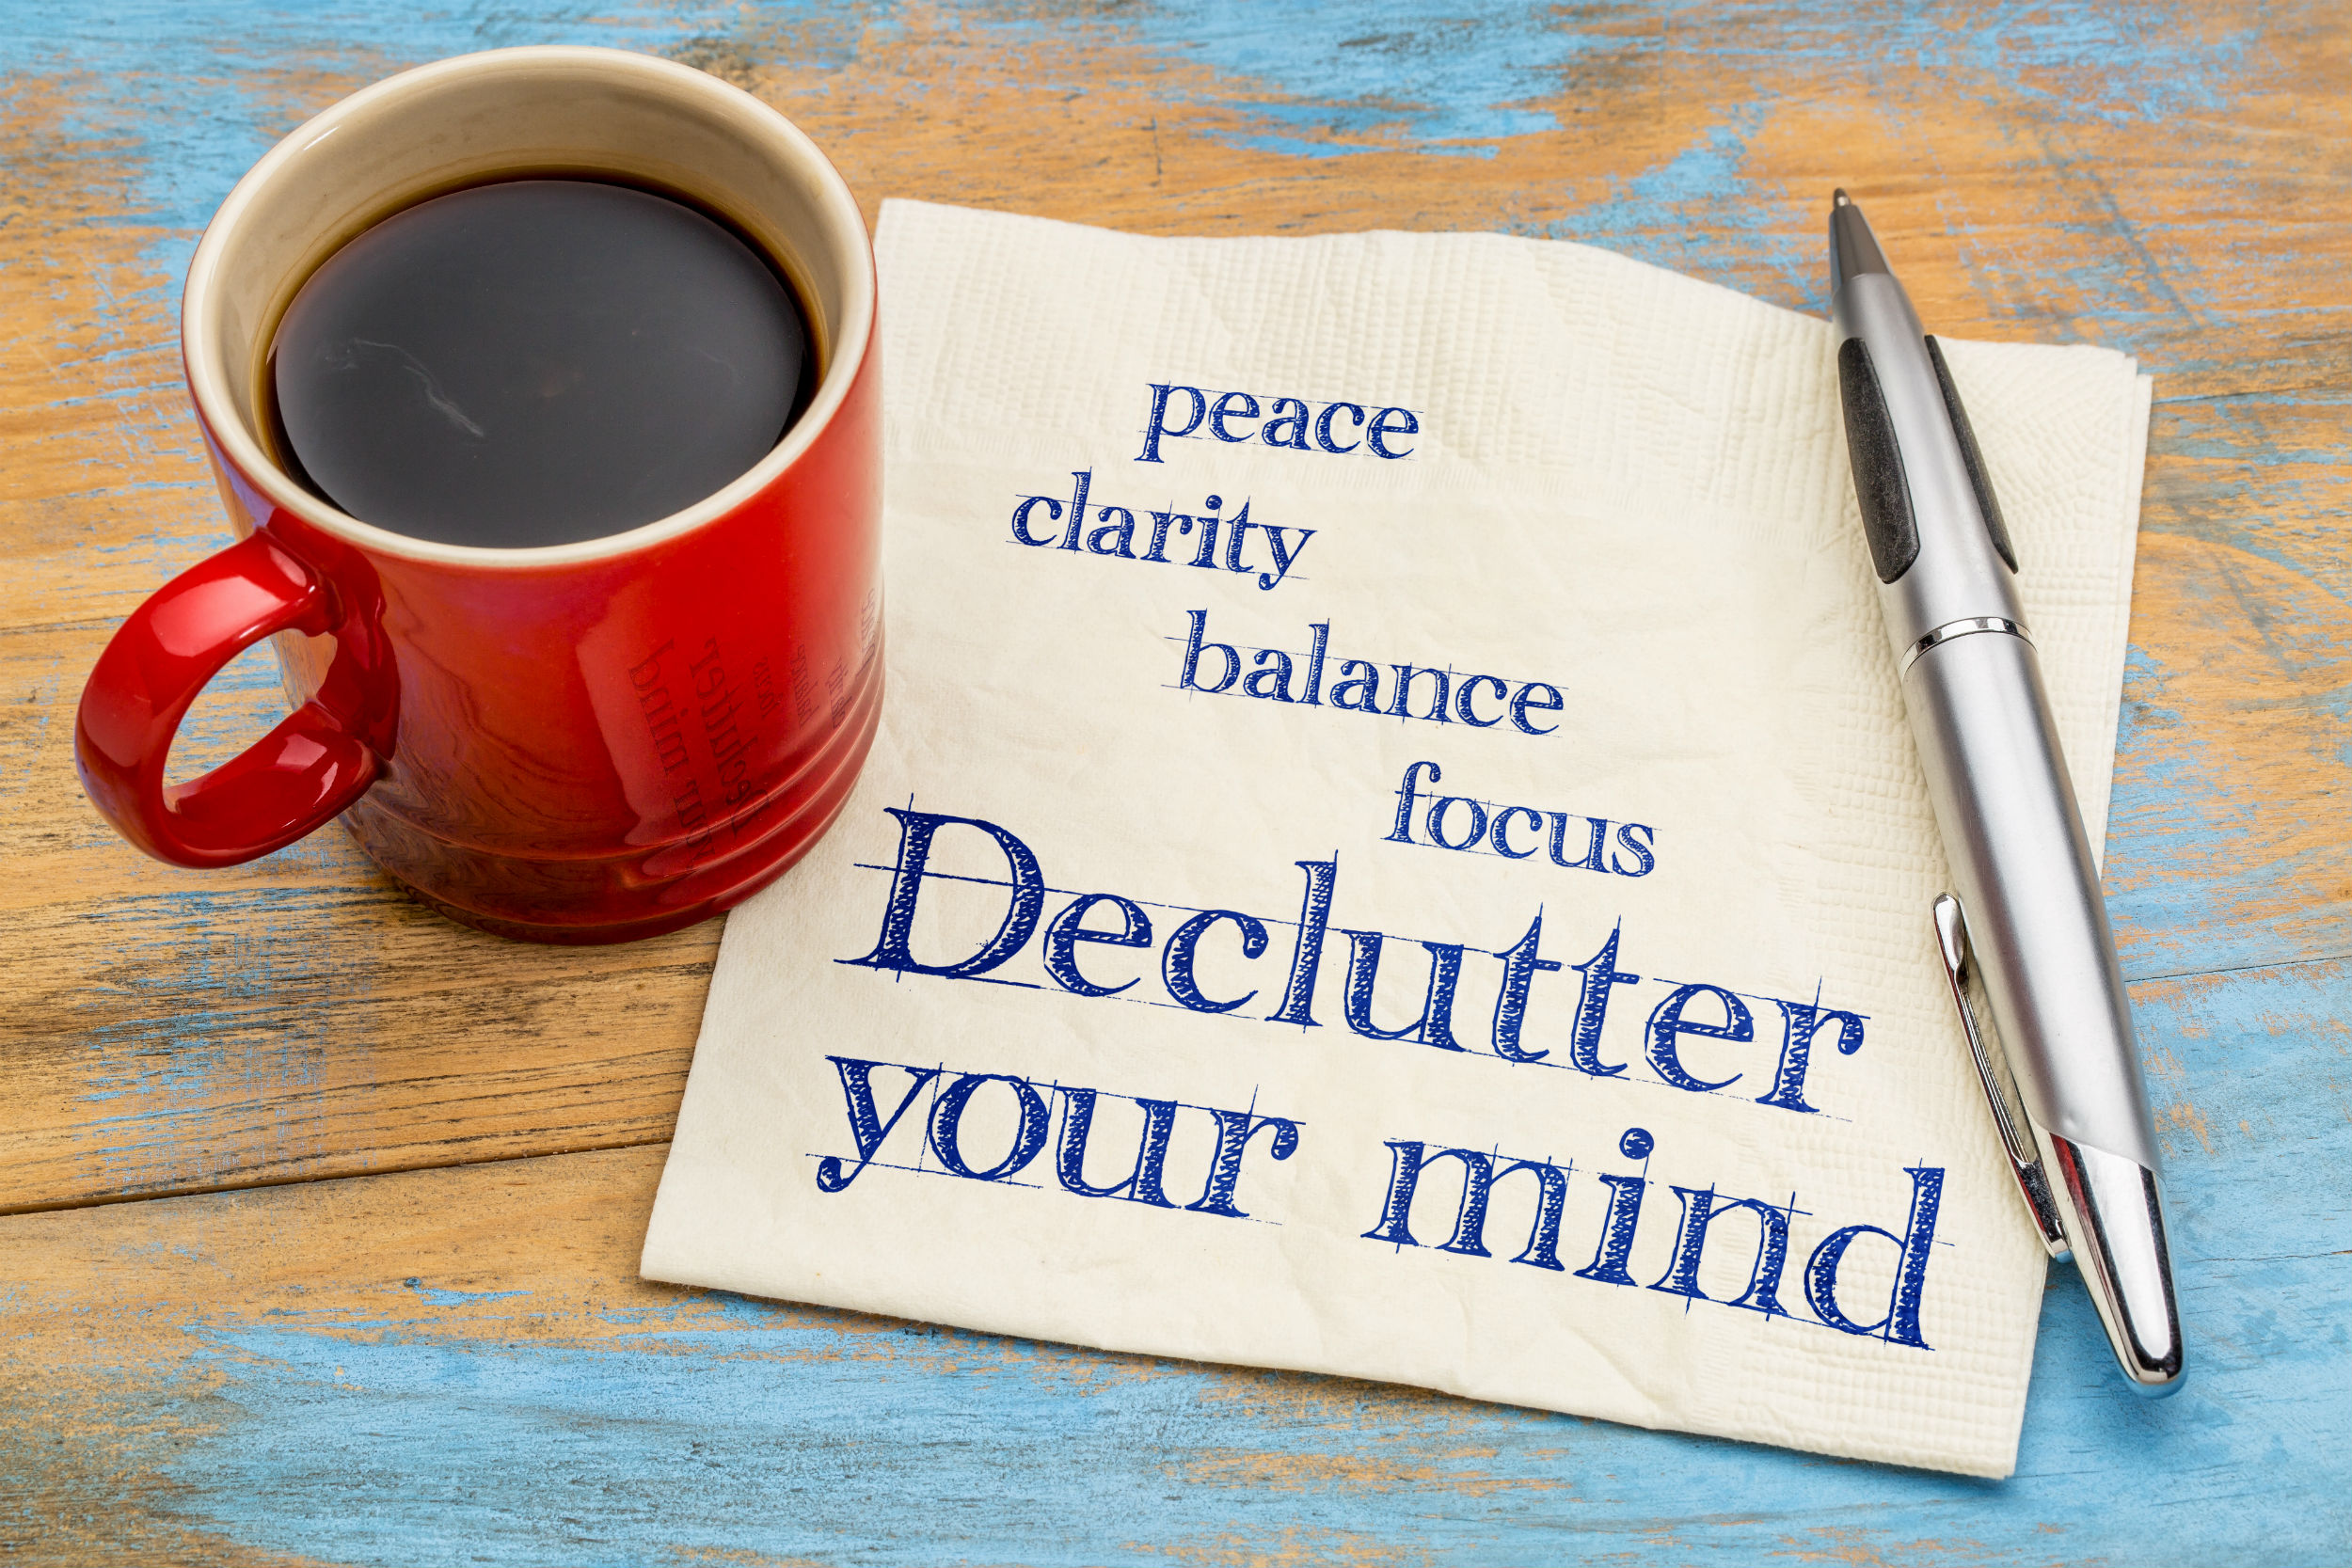 declutter your mind